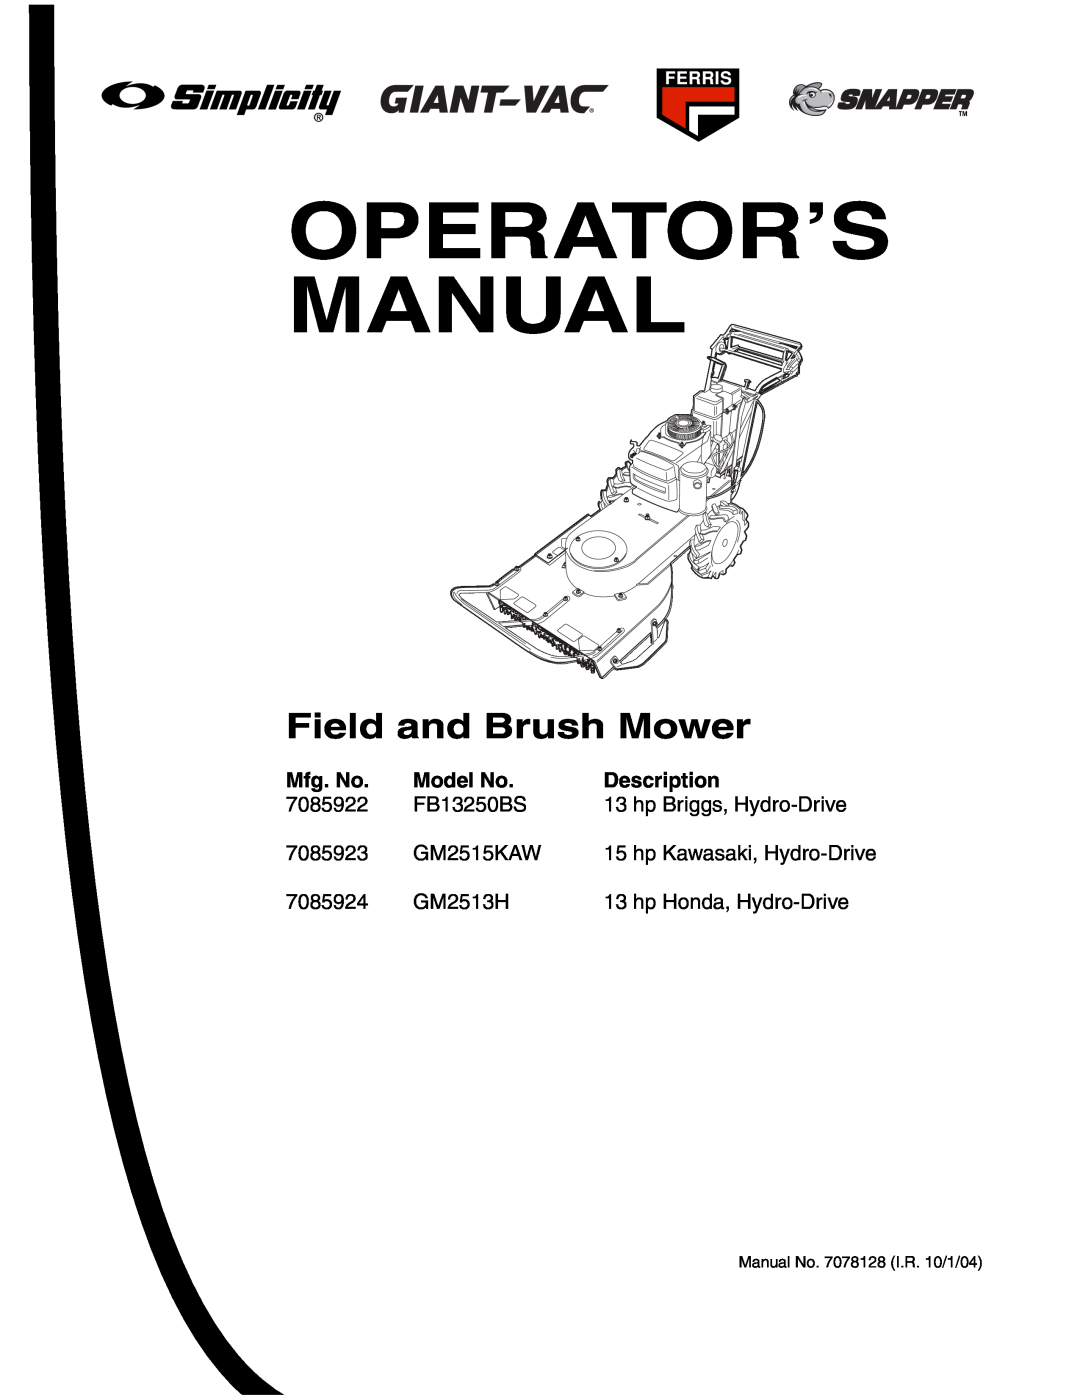 Snapper FB13250BS, GM2515KAW, GM2513H manual Mfg. No, Model No, Description, Operator’S Manual, Field and Brush Mower 